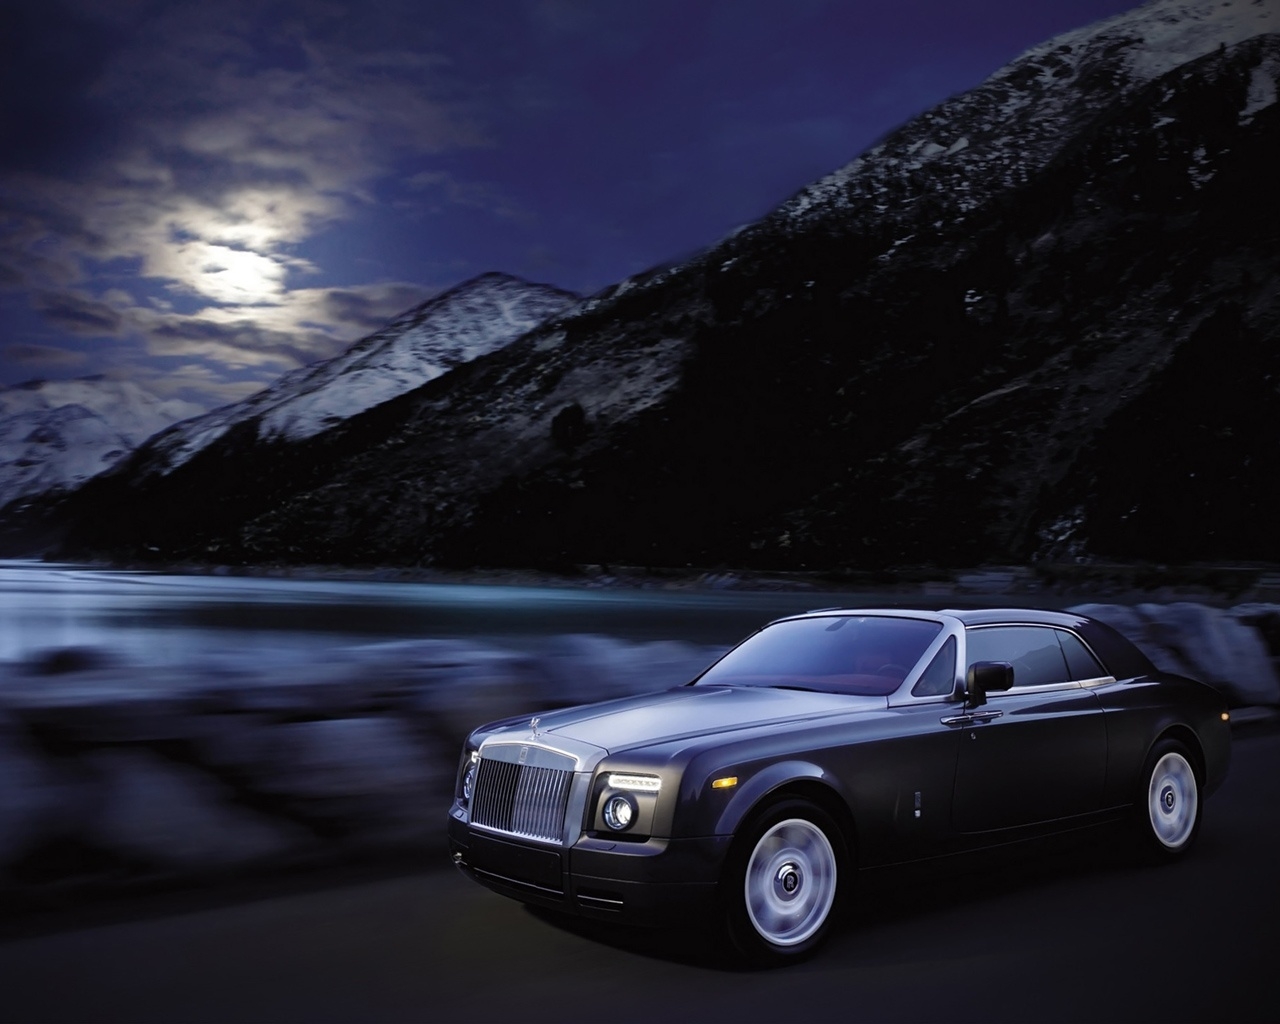 Rolls Royce Phantom Coupe Night 2010 for 1280 x 1024 resolution